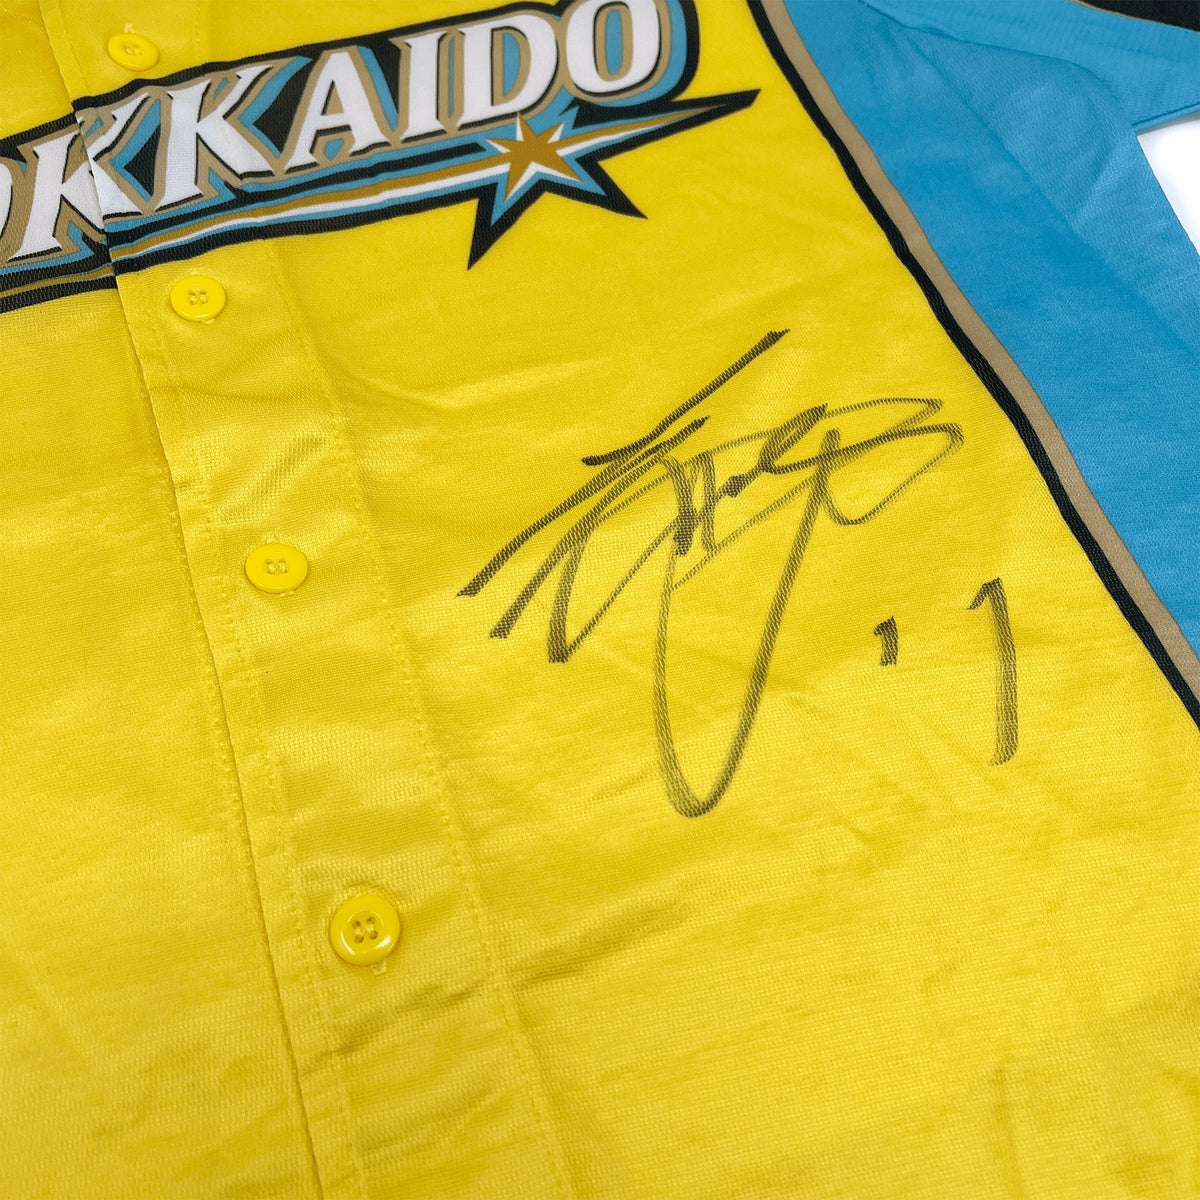 Retro Signed Autographed Nippon Ham Fighters Era Shohei Ohtani Jersey Yellow